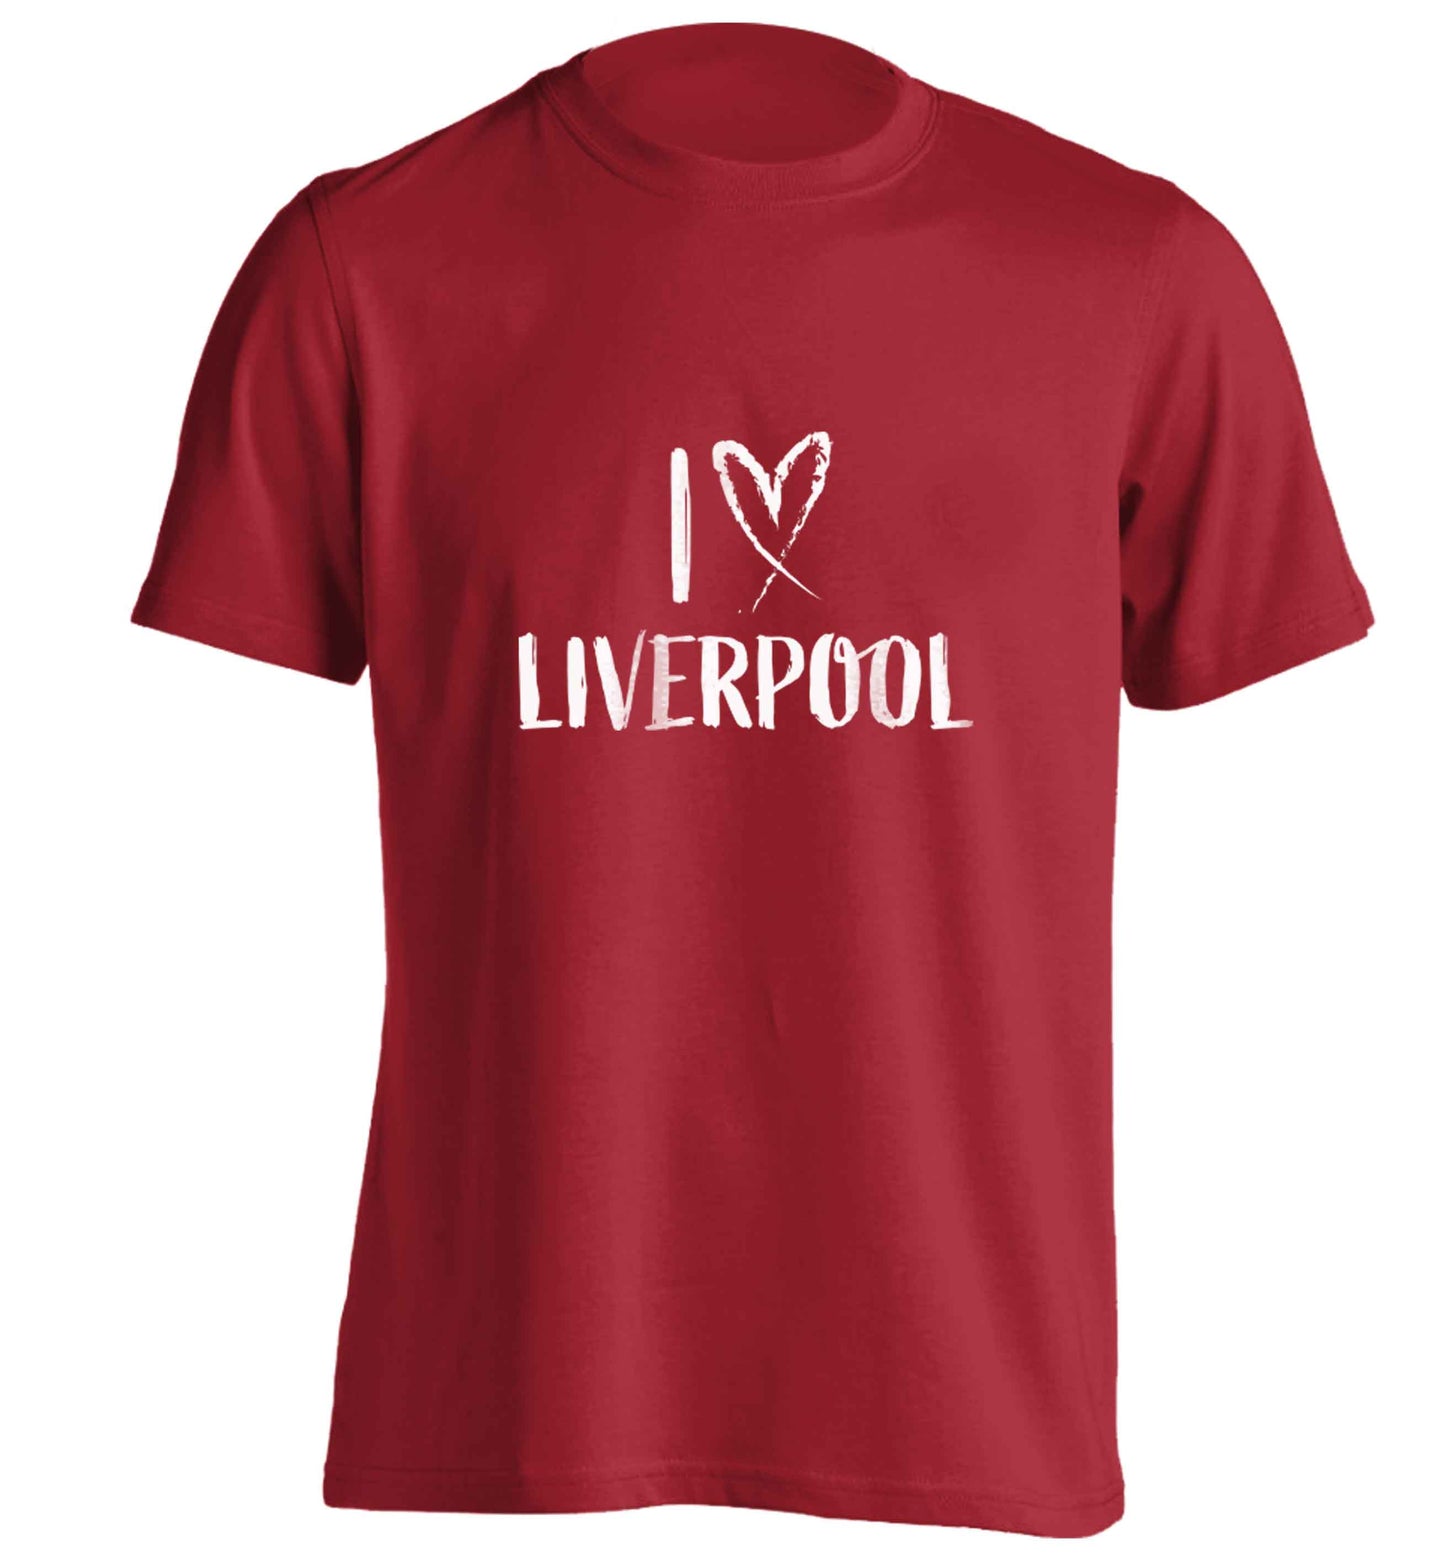 I love Liverpool adults unisex red Tshirt 2XL